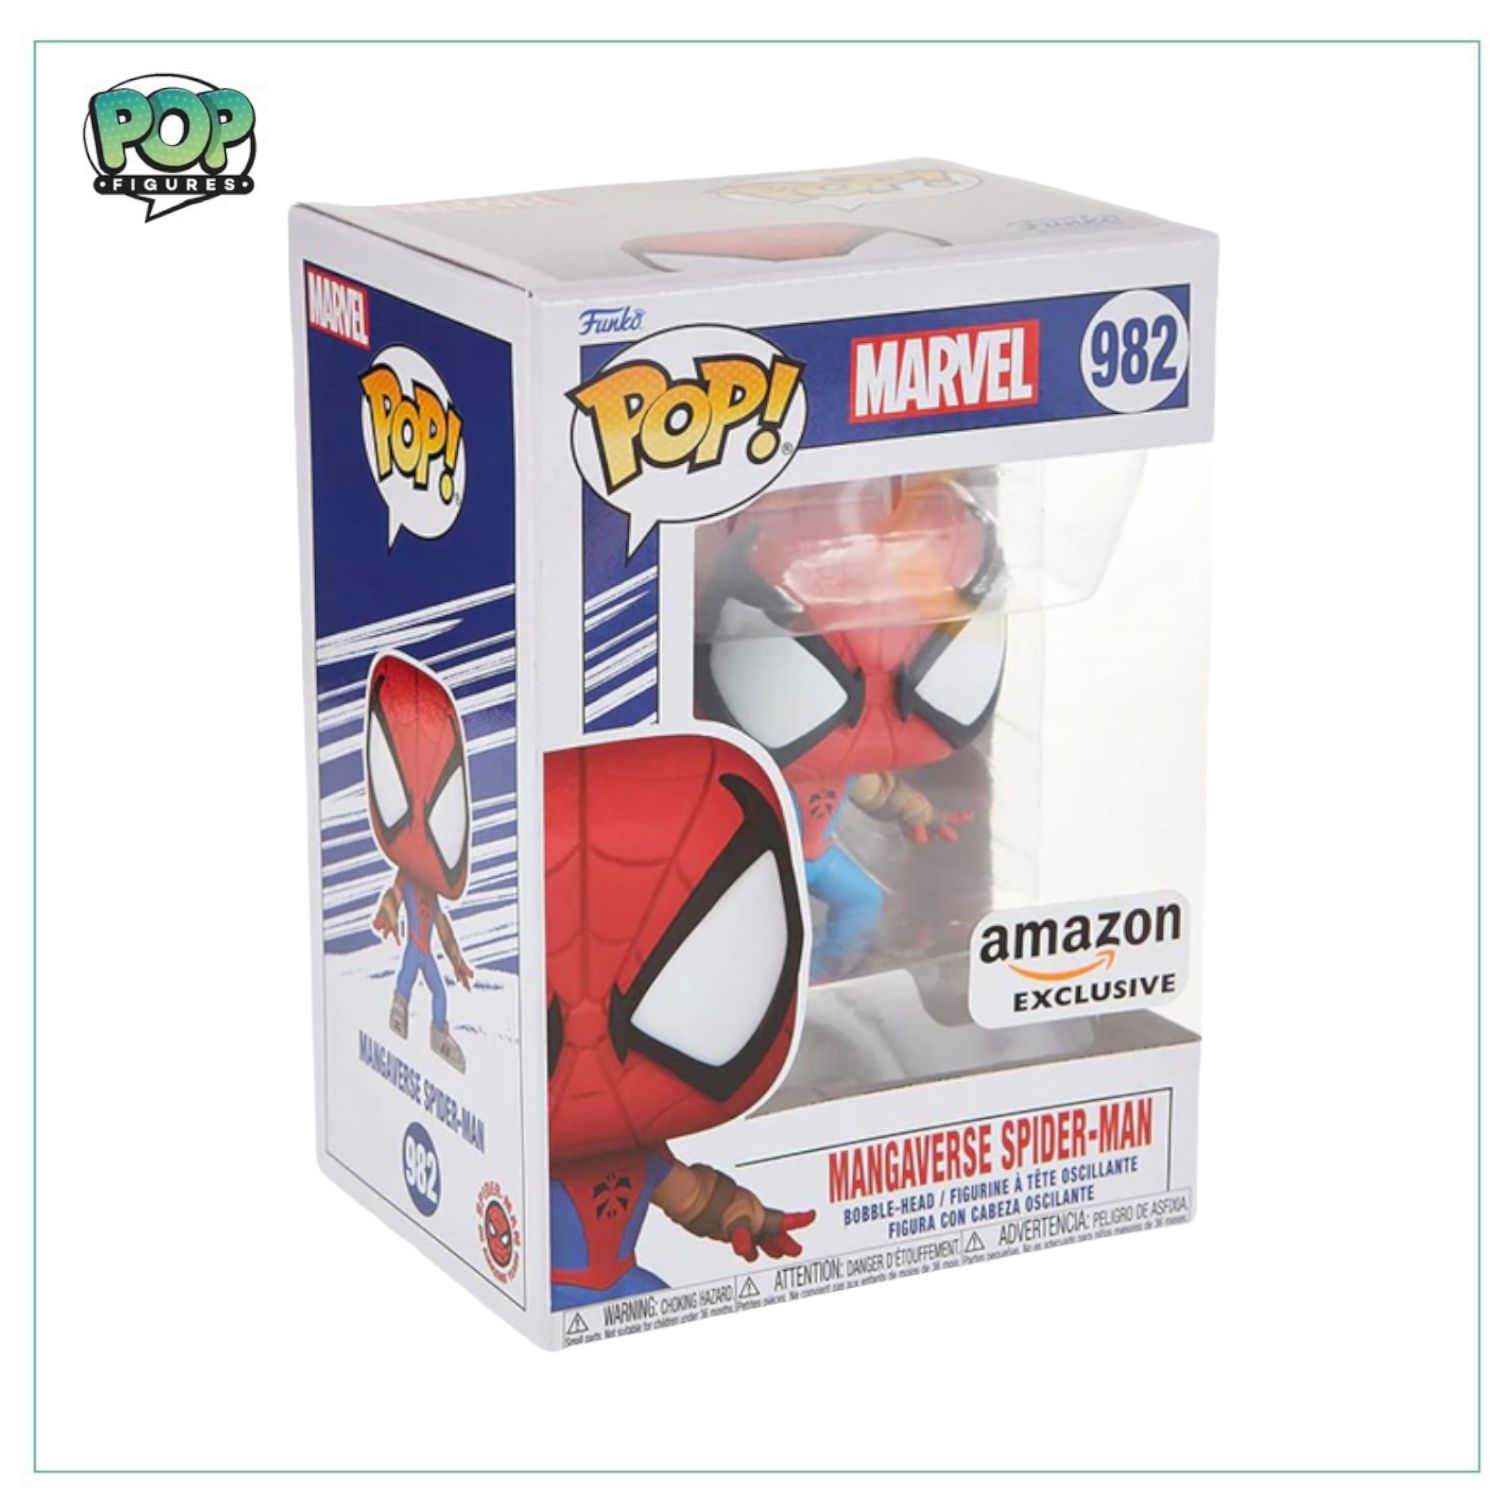 Mangaverse Spider-Man #982 Funko Pop! Marvel - Amazon Exclusive